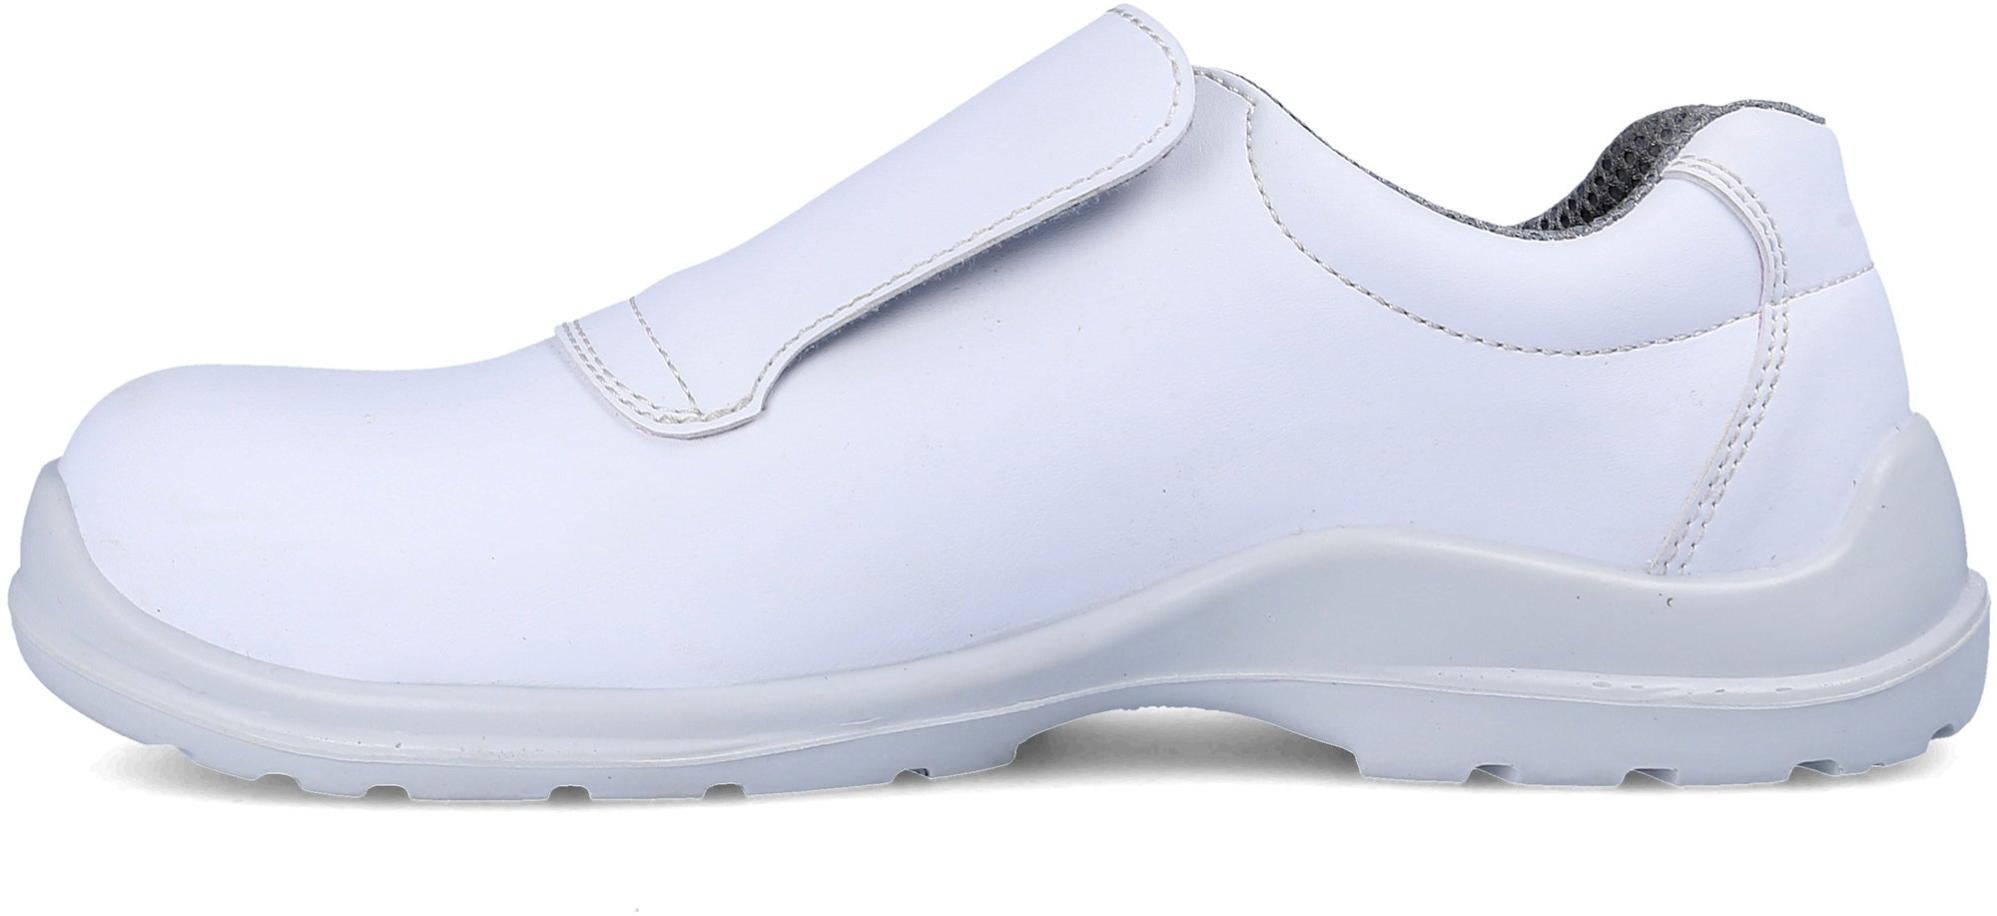 Zapato seguridad paredes, arzak microfibra blanco, talla 35